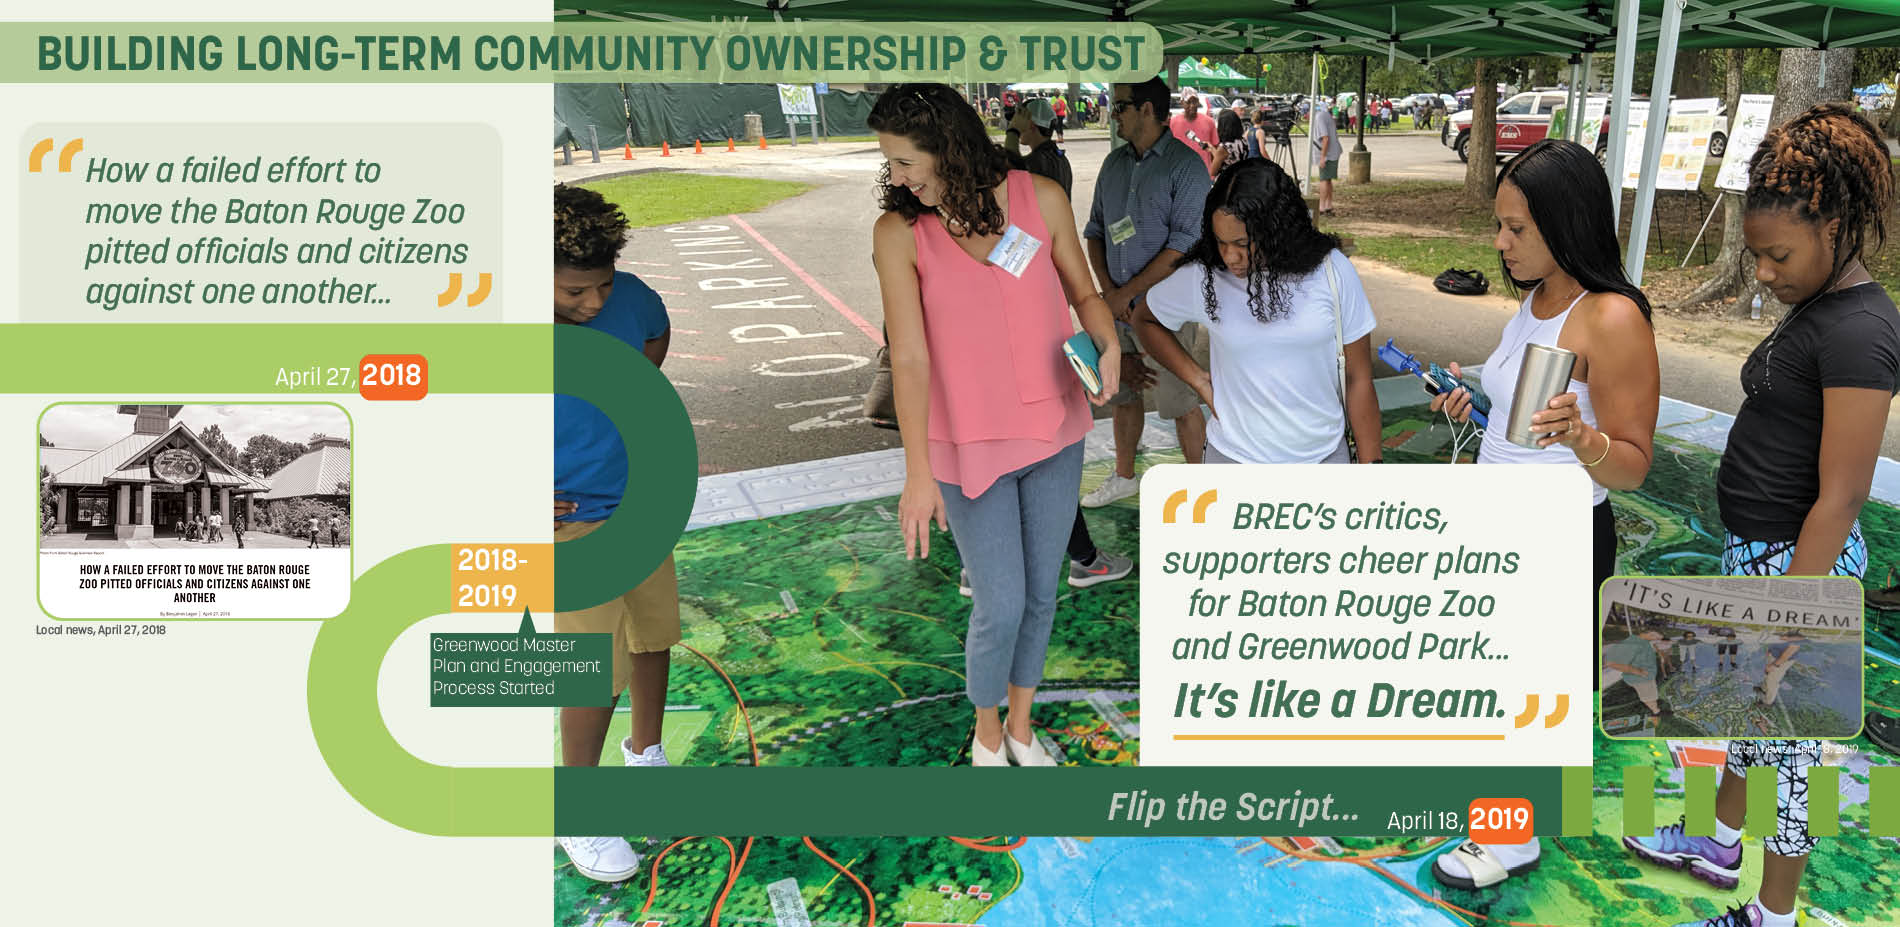 Building Long-Term Community Ownership & Trust